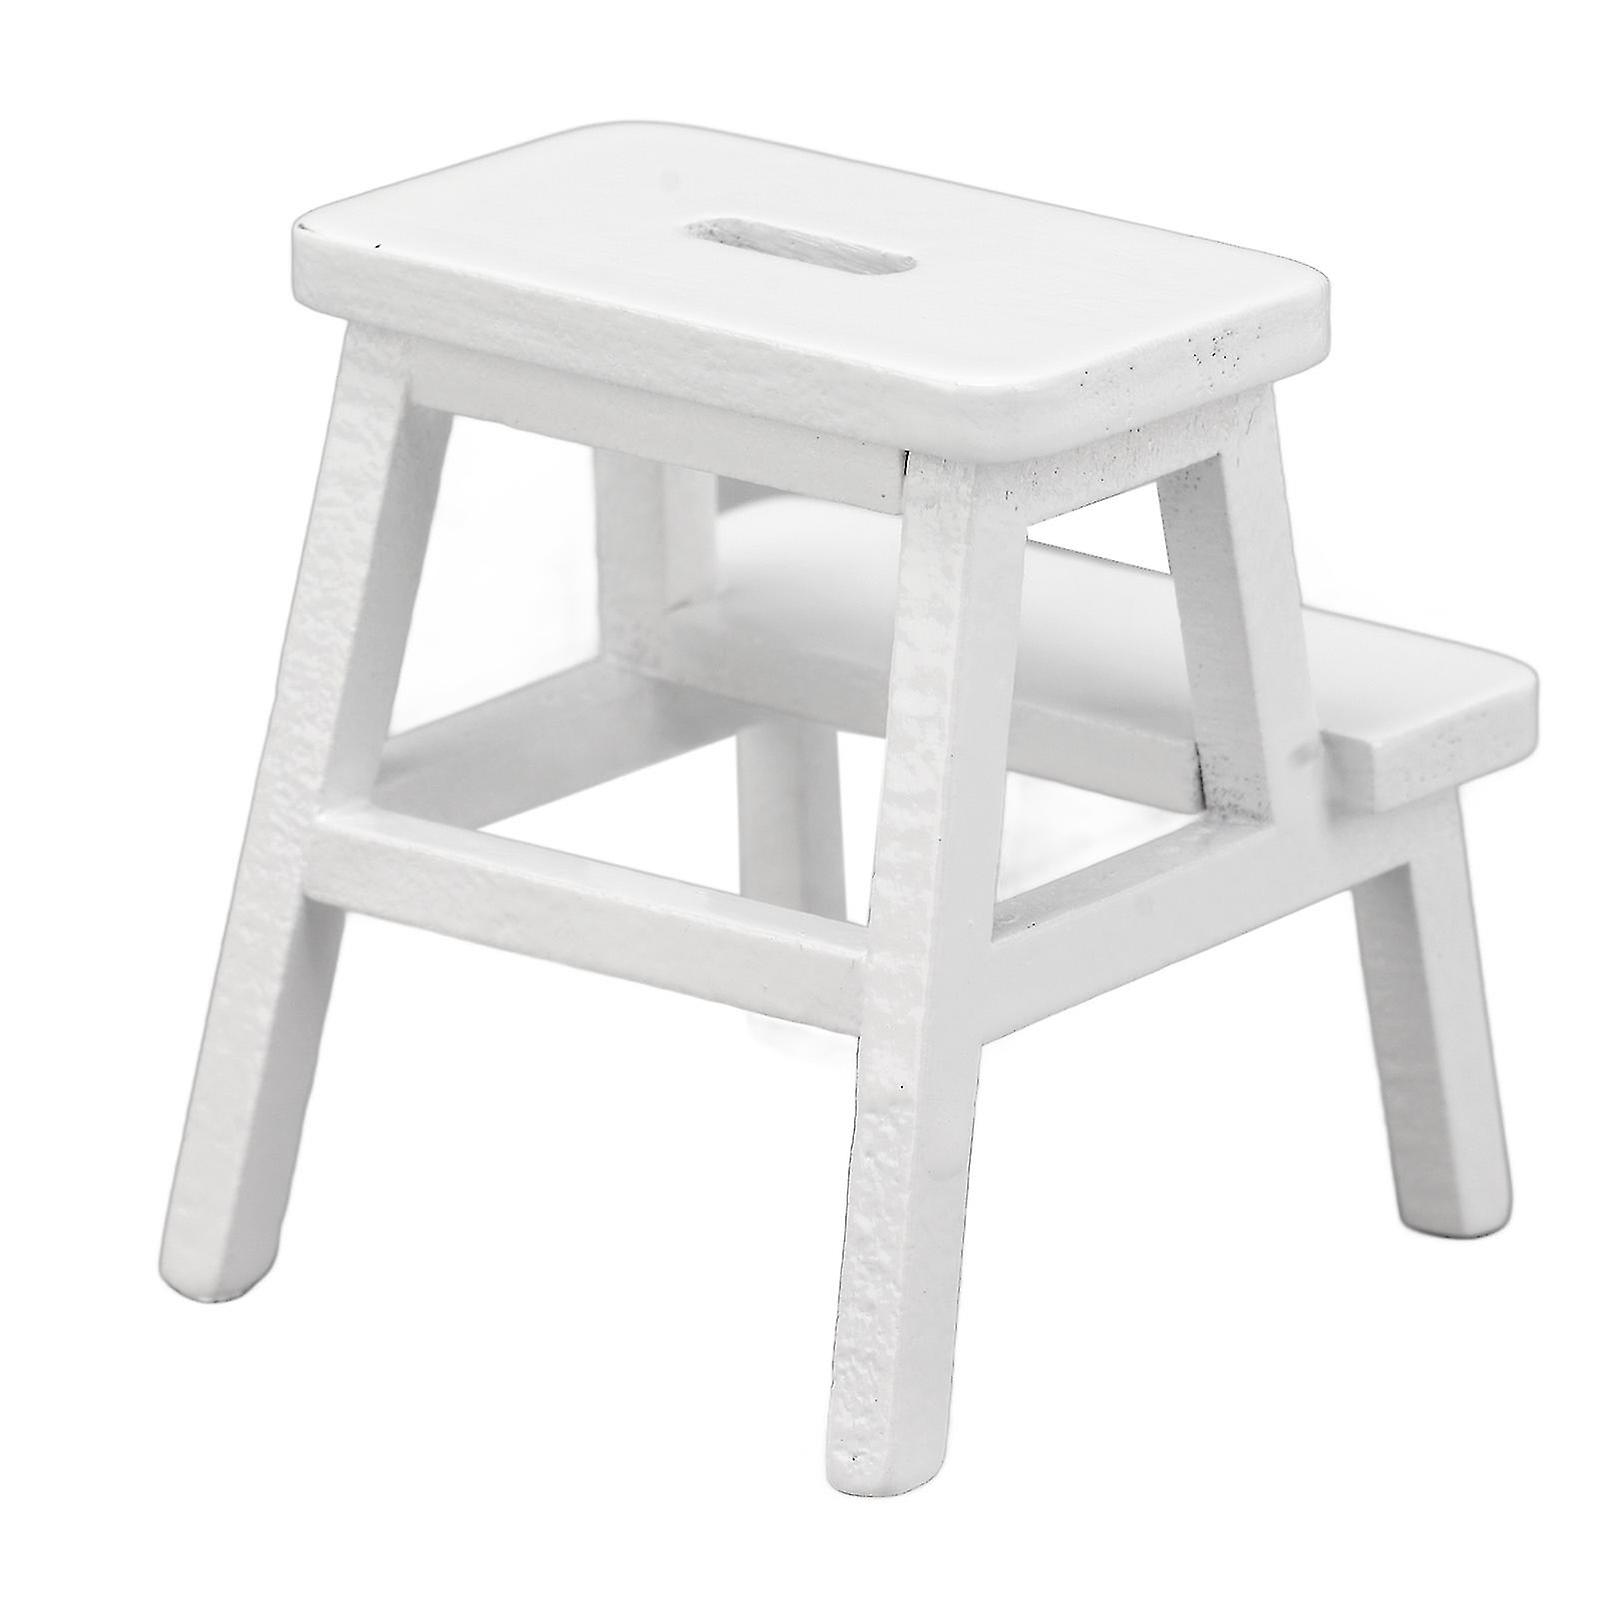 1/12 Dollhouse Stool Vivid 4 Chair Leg 2 Steps Lightweight Rectangle Shape Mini Dollhouse Furniture Stool White